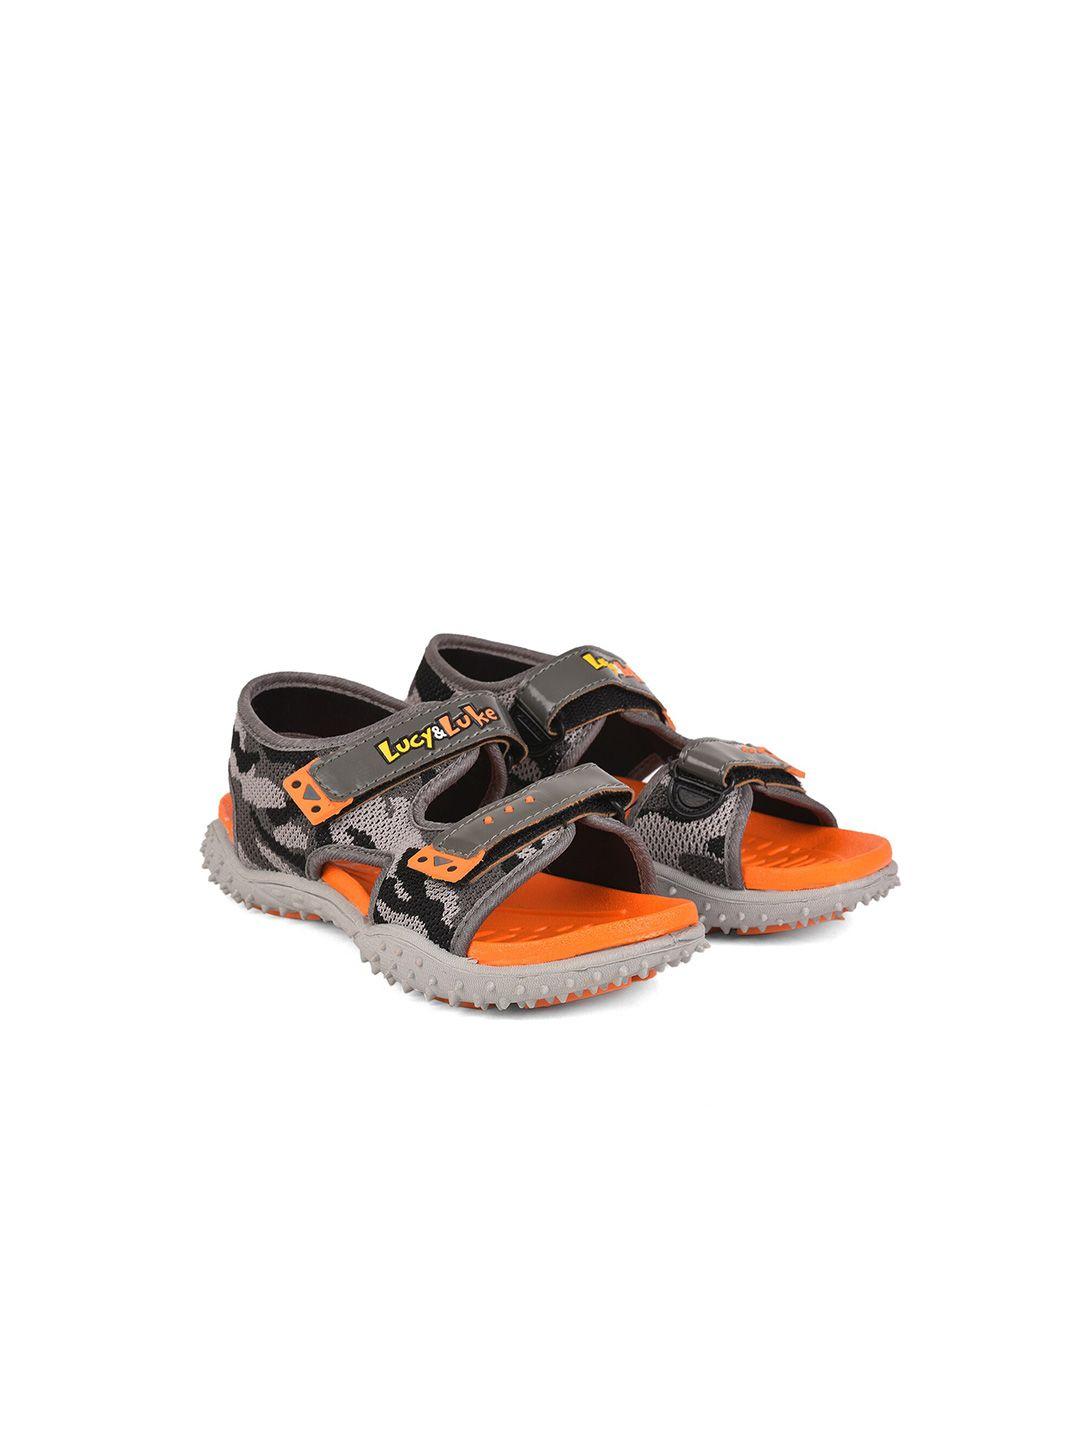 liberty kids orange & grey printed sports sandals